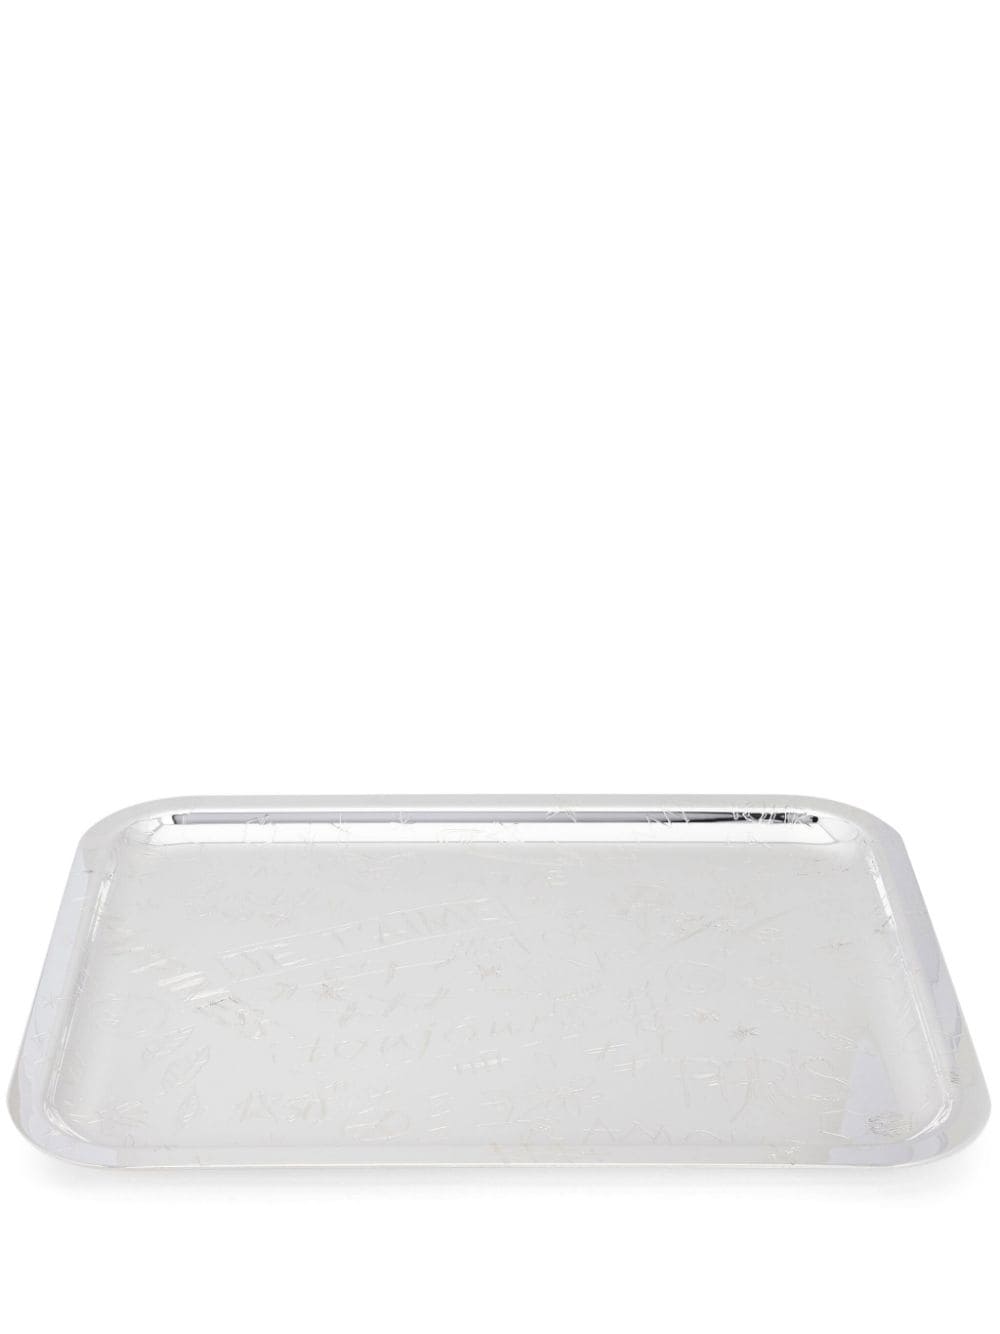 Christofle Graffiti silver-plated rectangular tray von Christofle